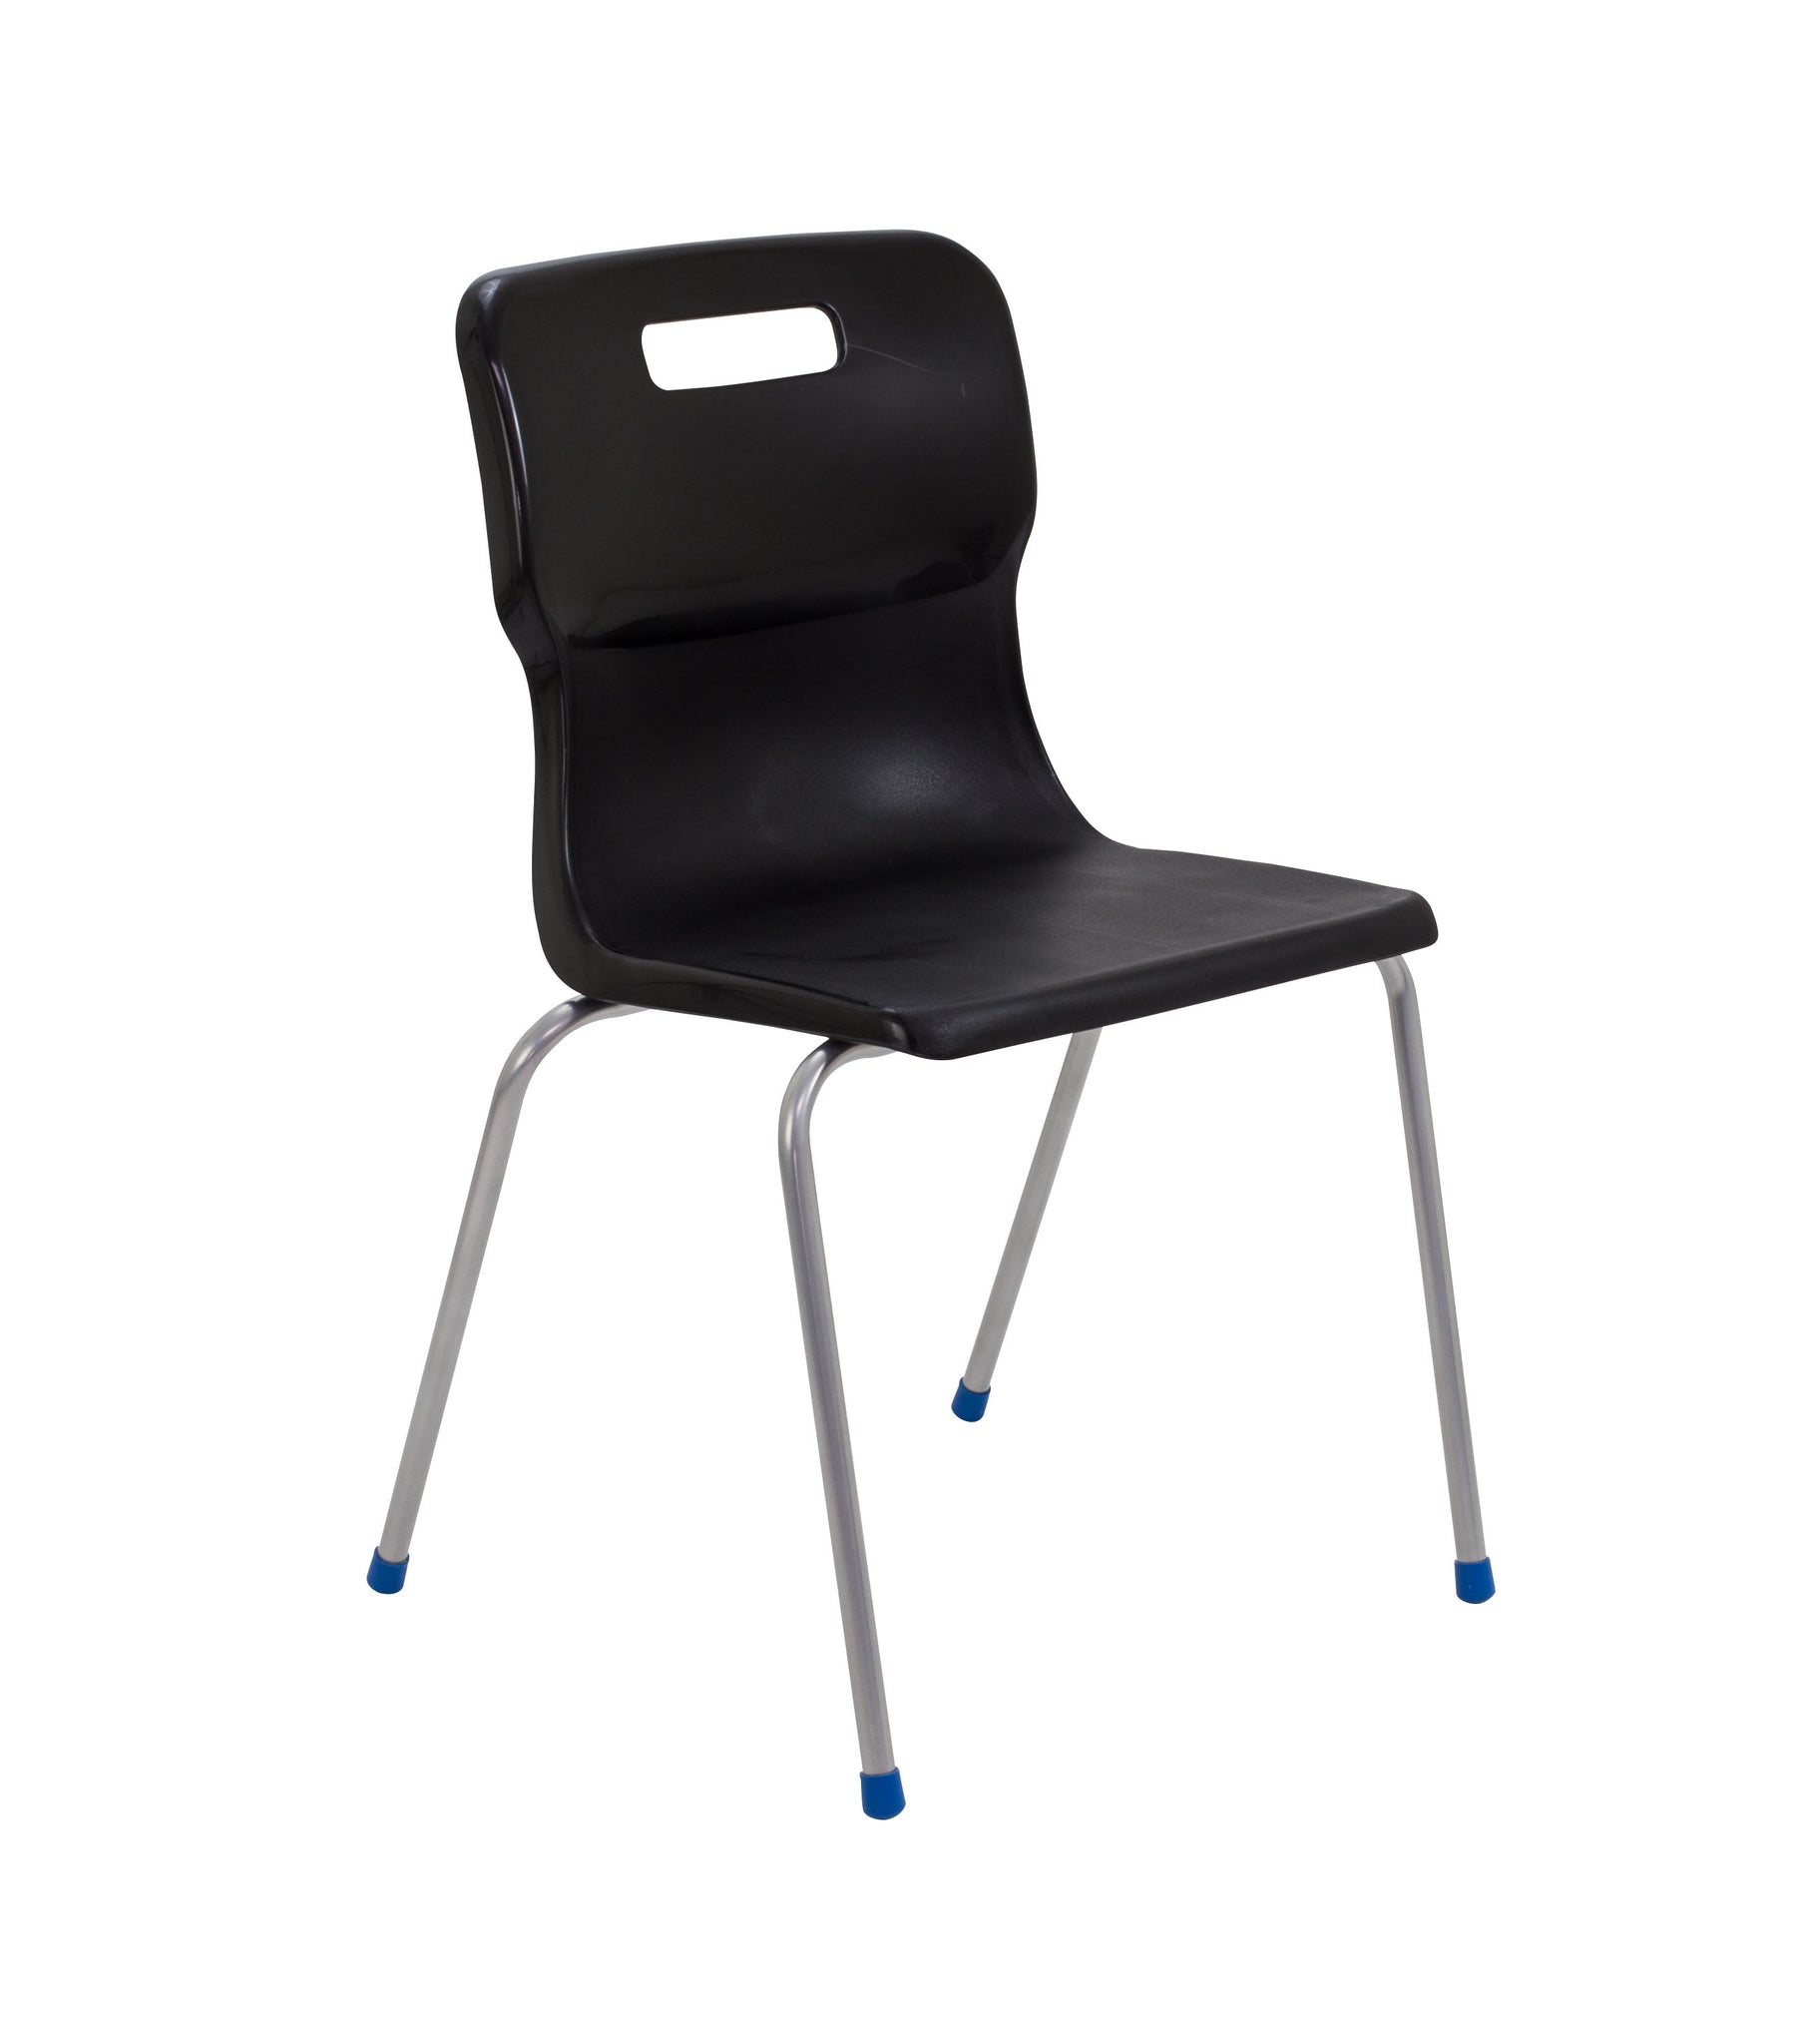 Children Chairs - Size 6 Metal Leg